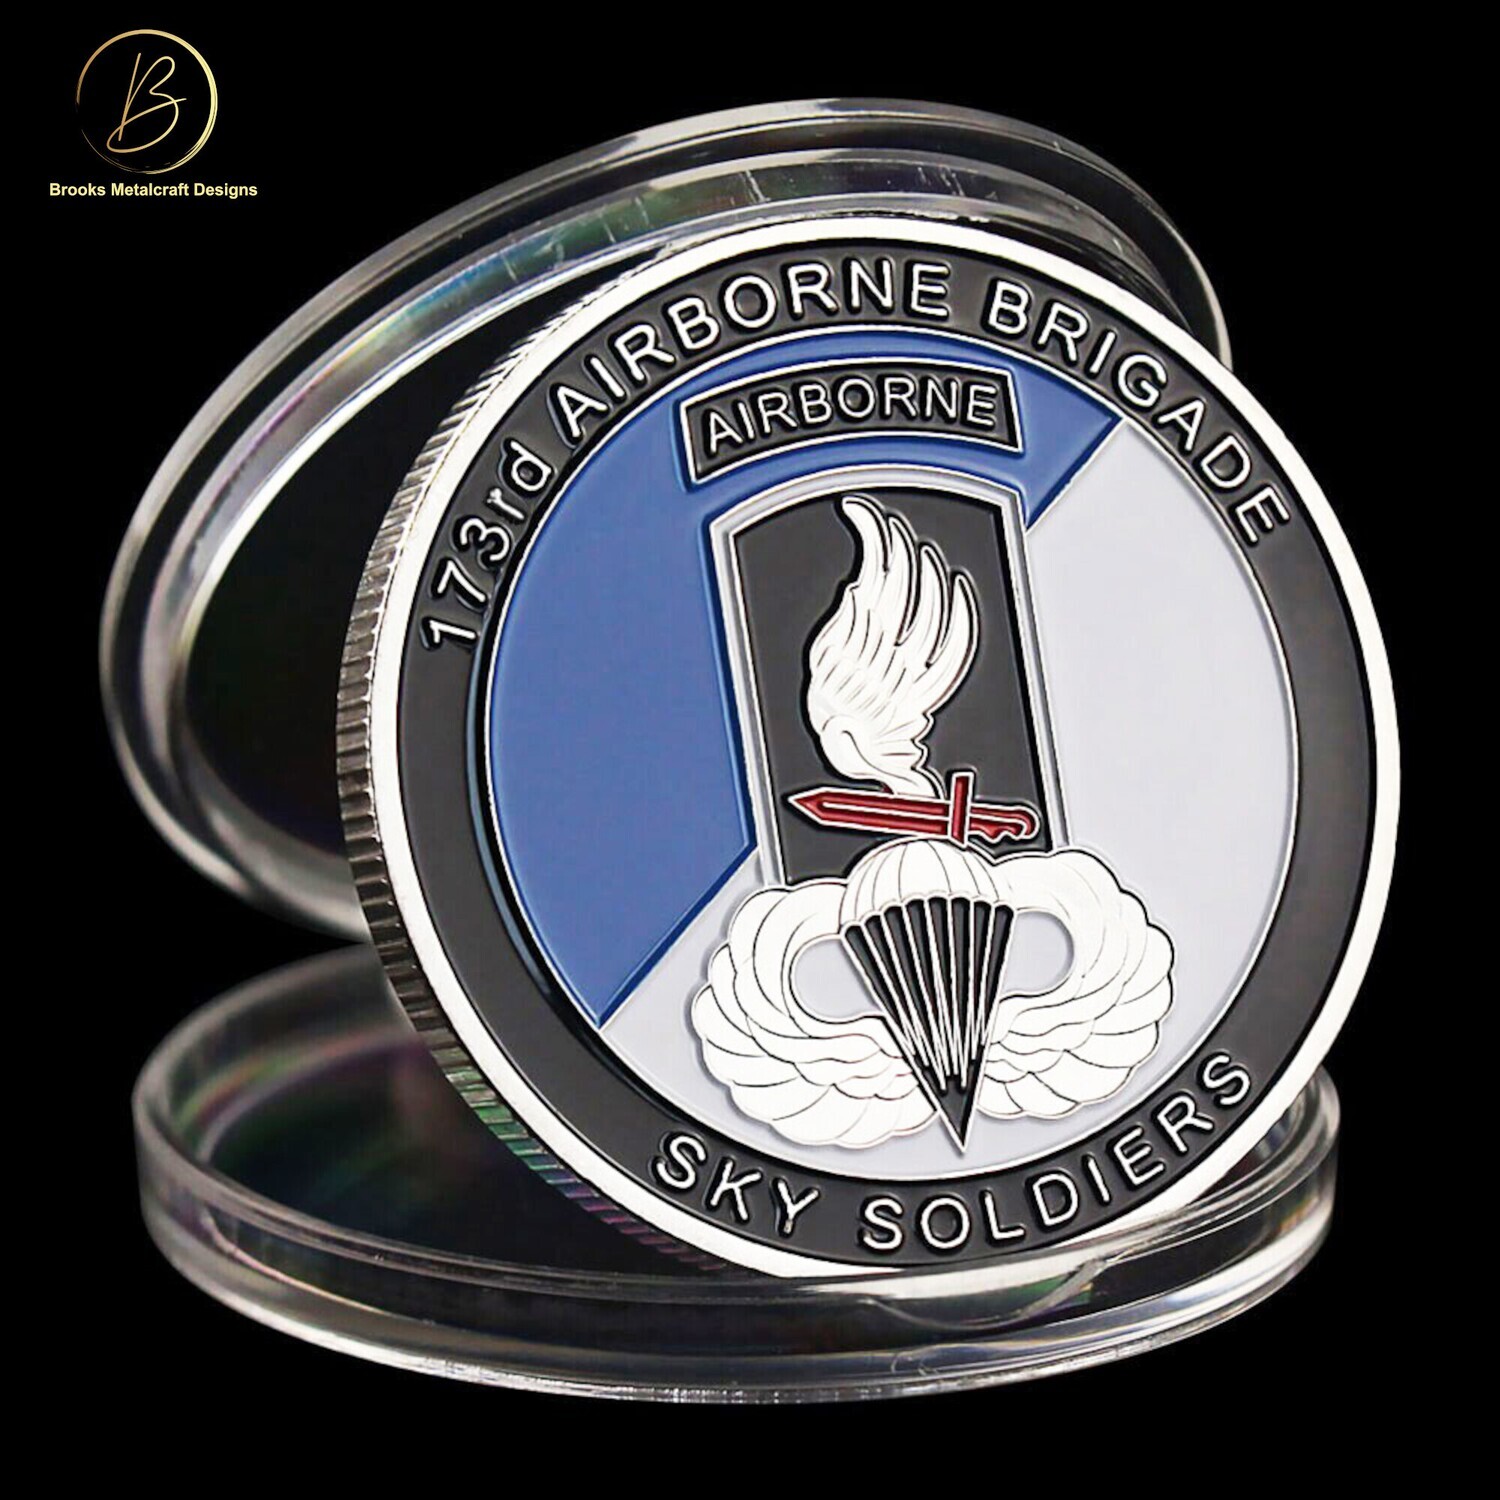 Army 173rd Airborne Brigade Challenge Coin